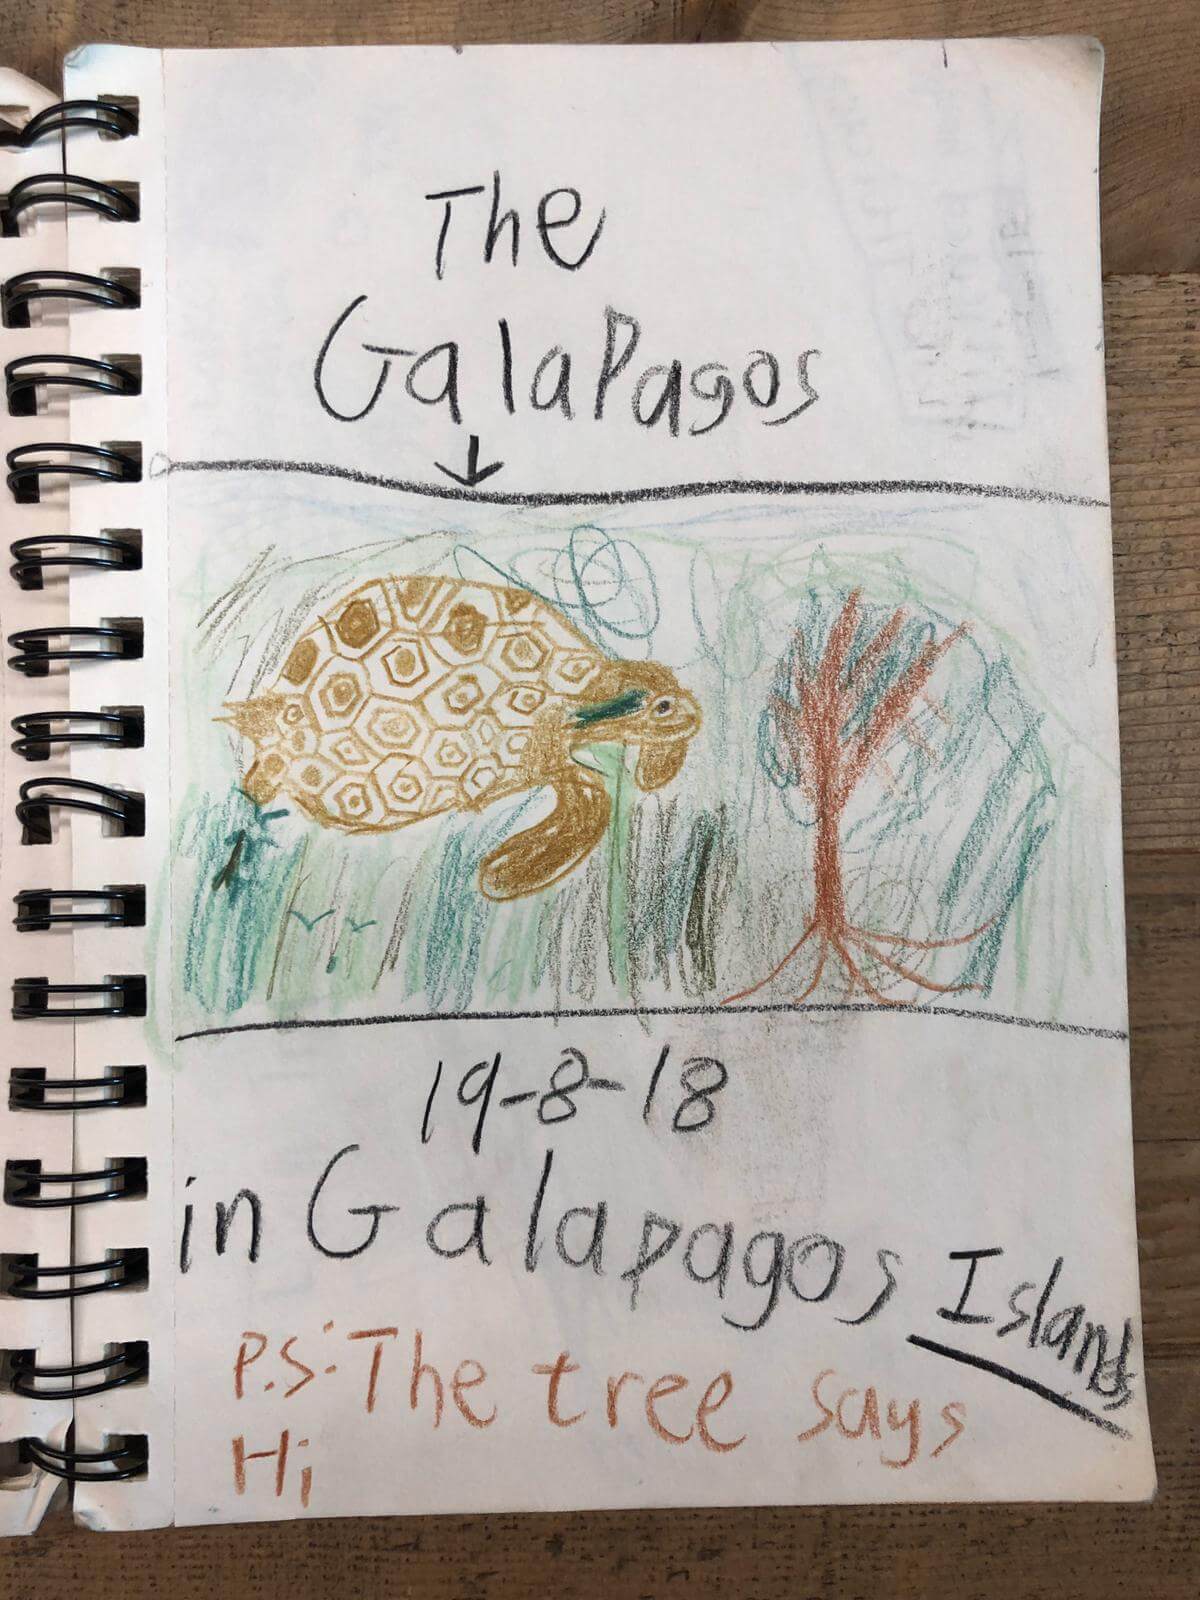  Lance說他最喜歡的地方是科隆群島 (Galápagos Islands)，有很多世界獨有的動物在島上棲息。看過大自然的美，令他更落力保護環境。